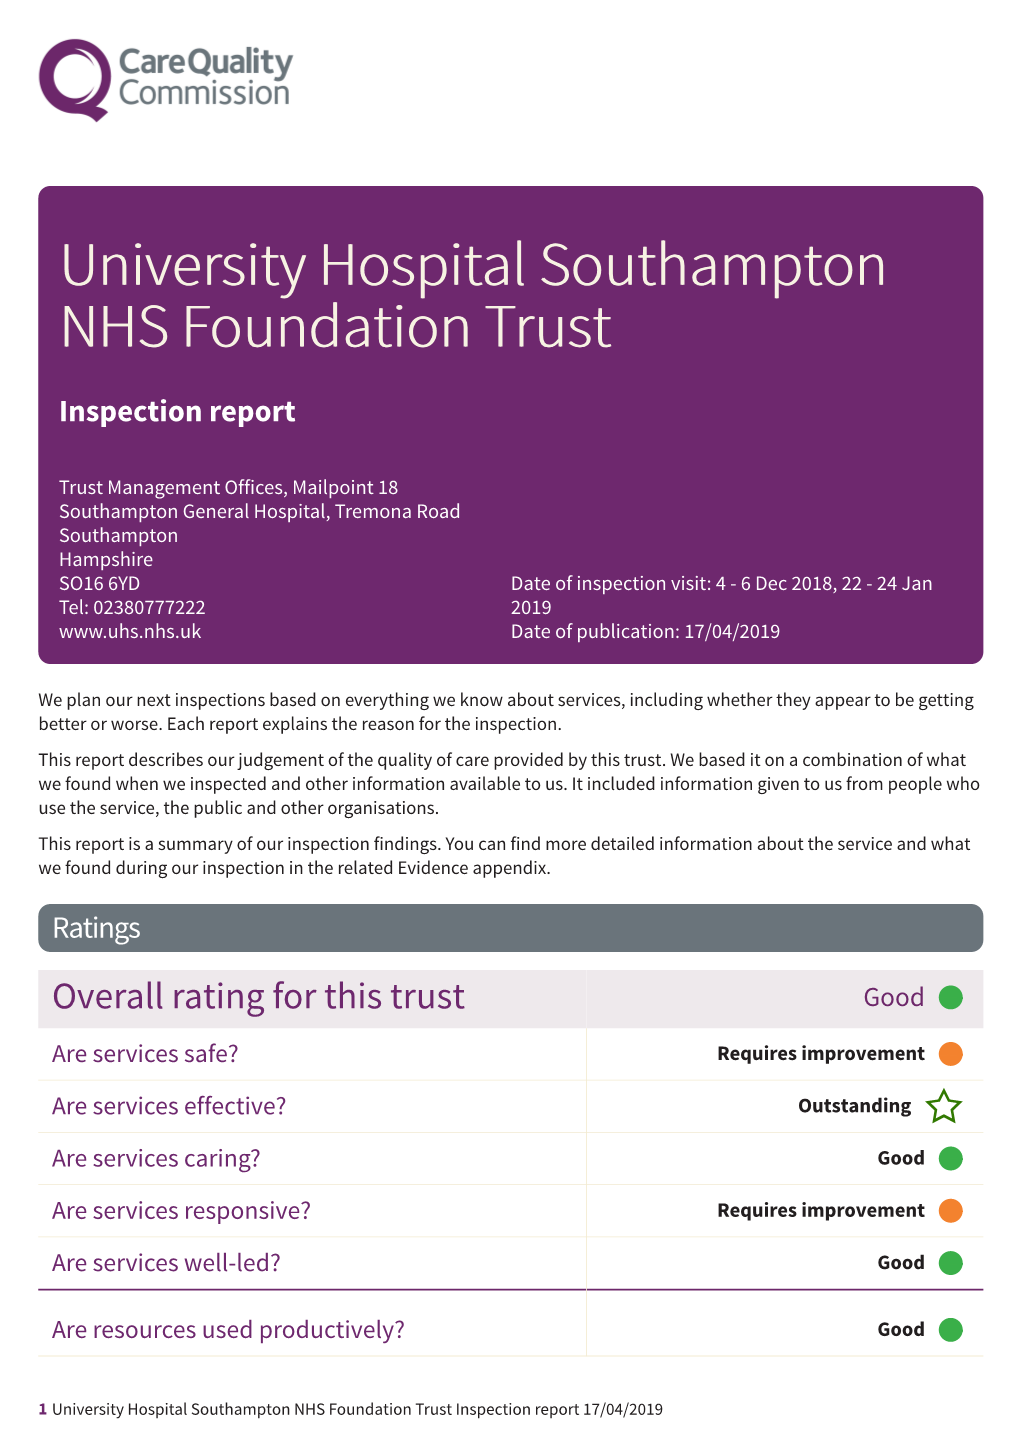 RHM University Hospital Southampton NHS Foundation Trust